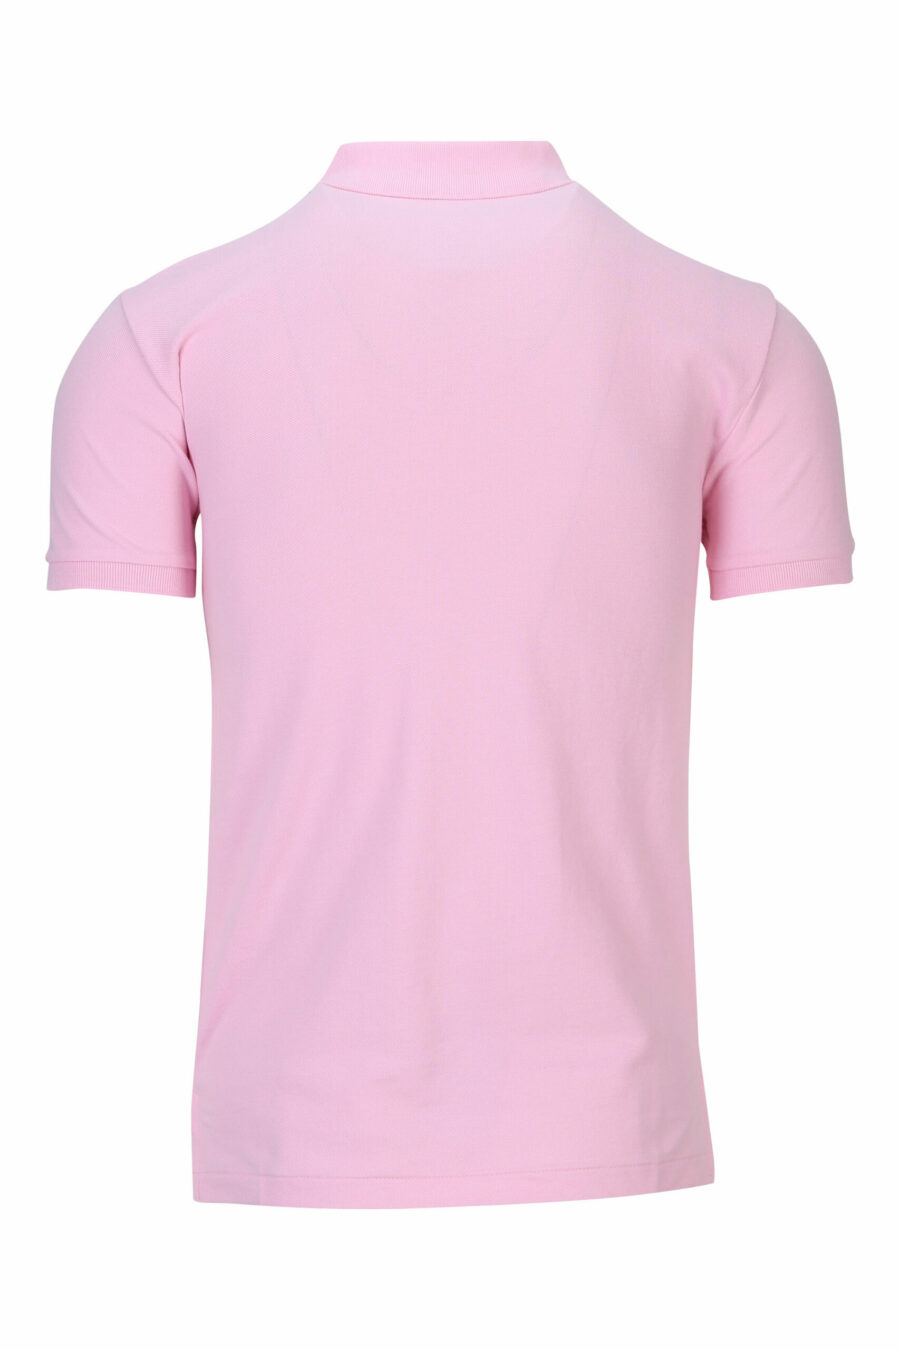 Pólo cor-de-rosa com mini-logotipo "polo" - 3615739771649 1 à escala